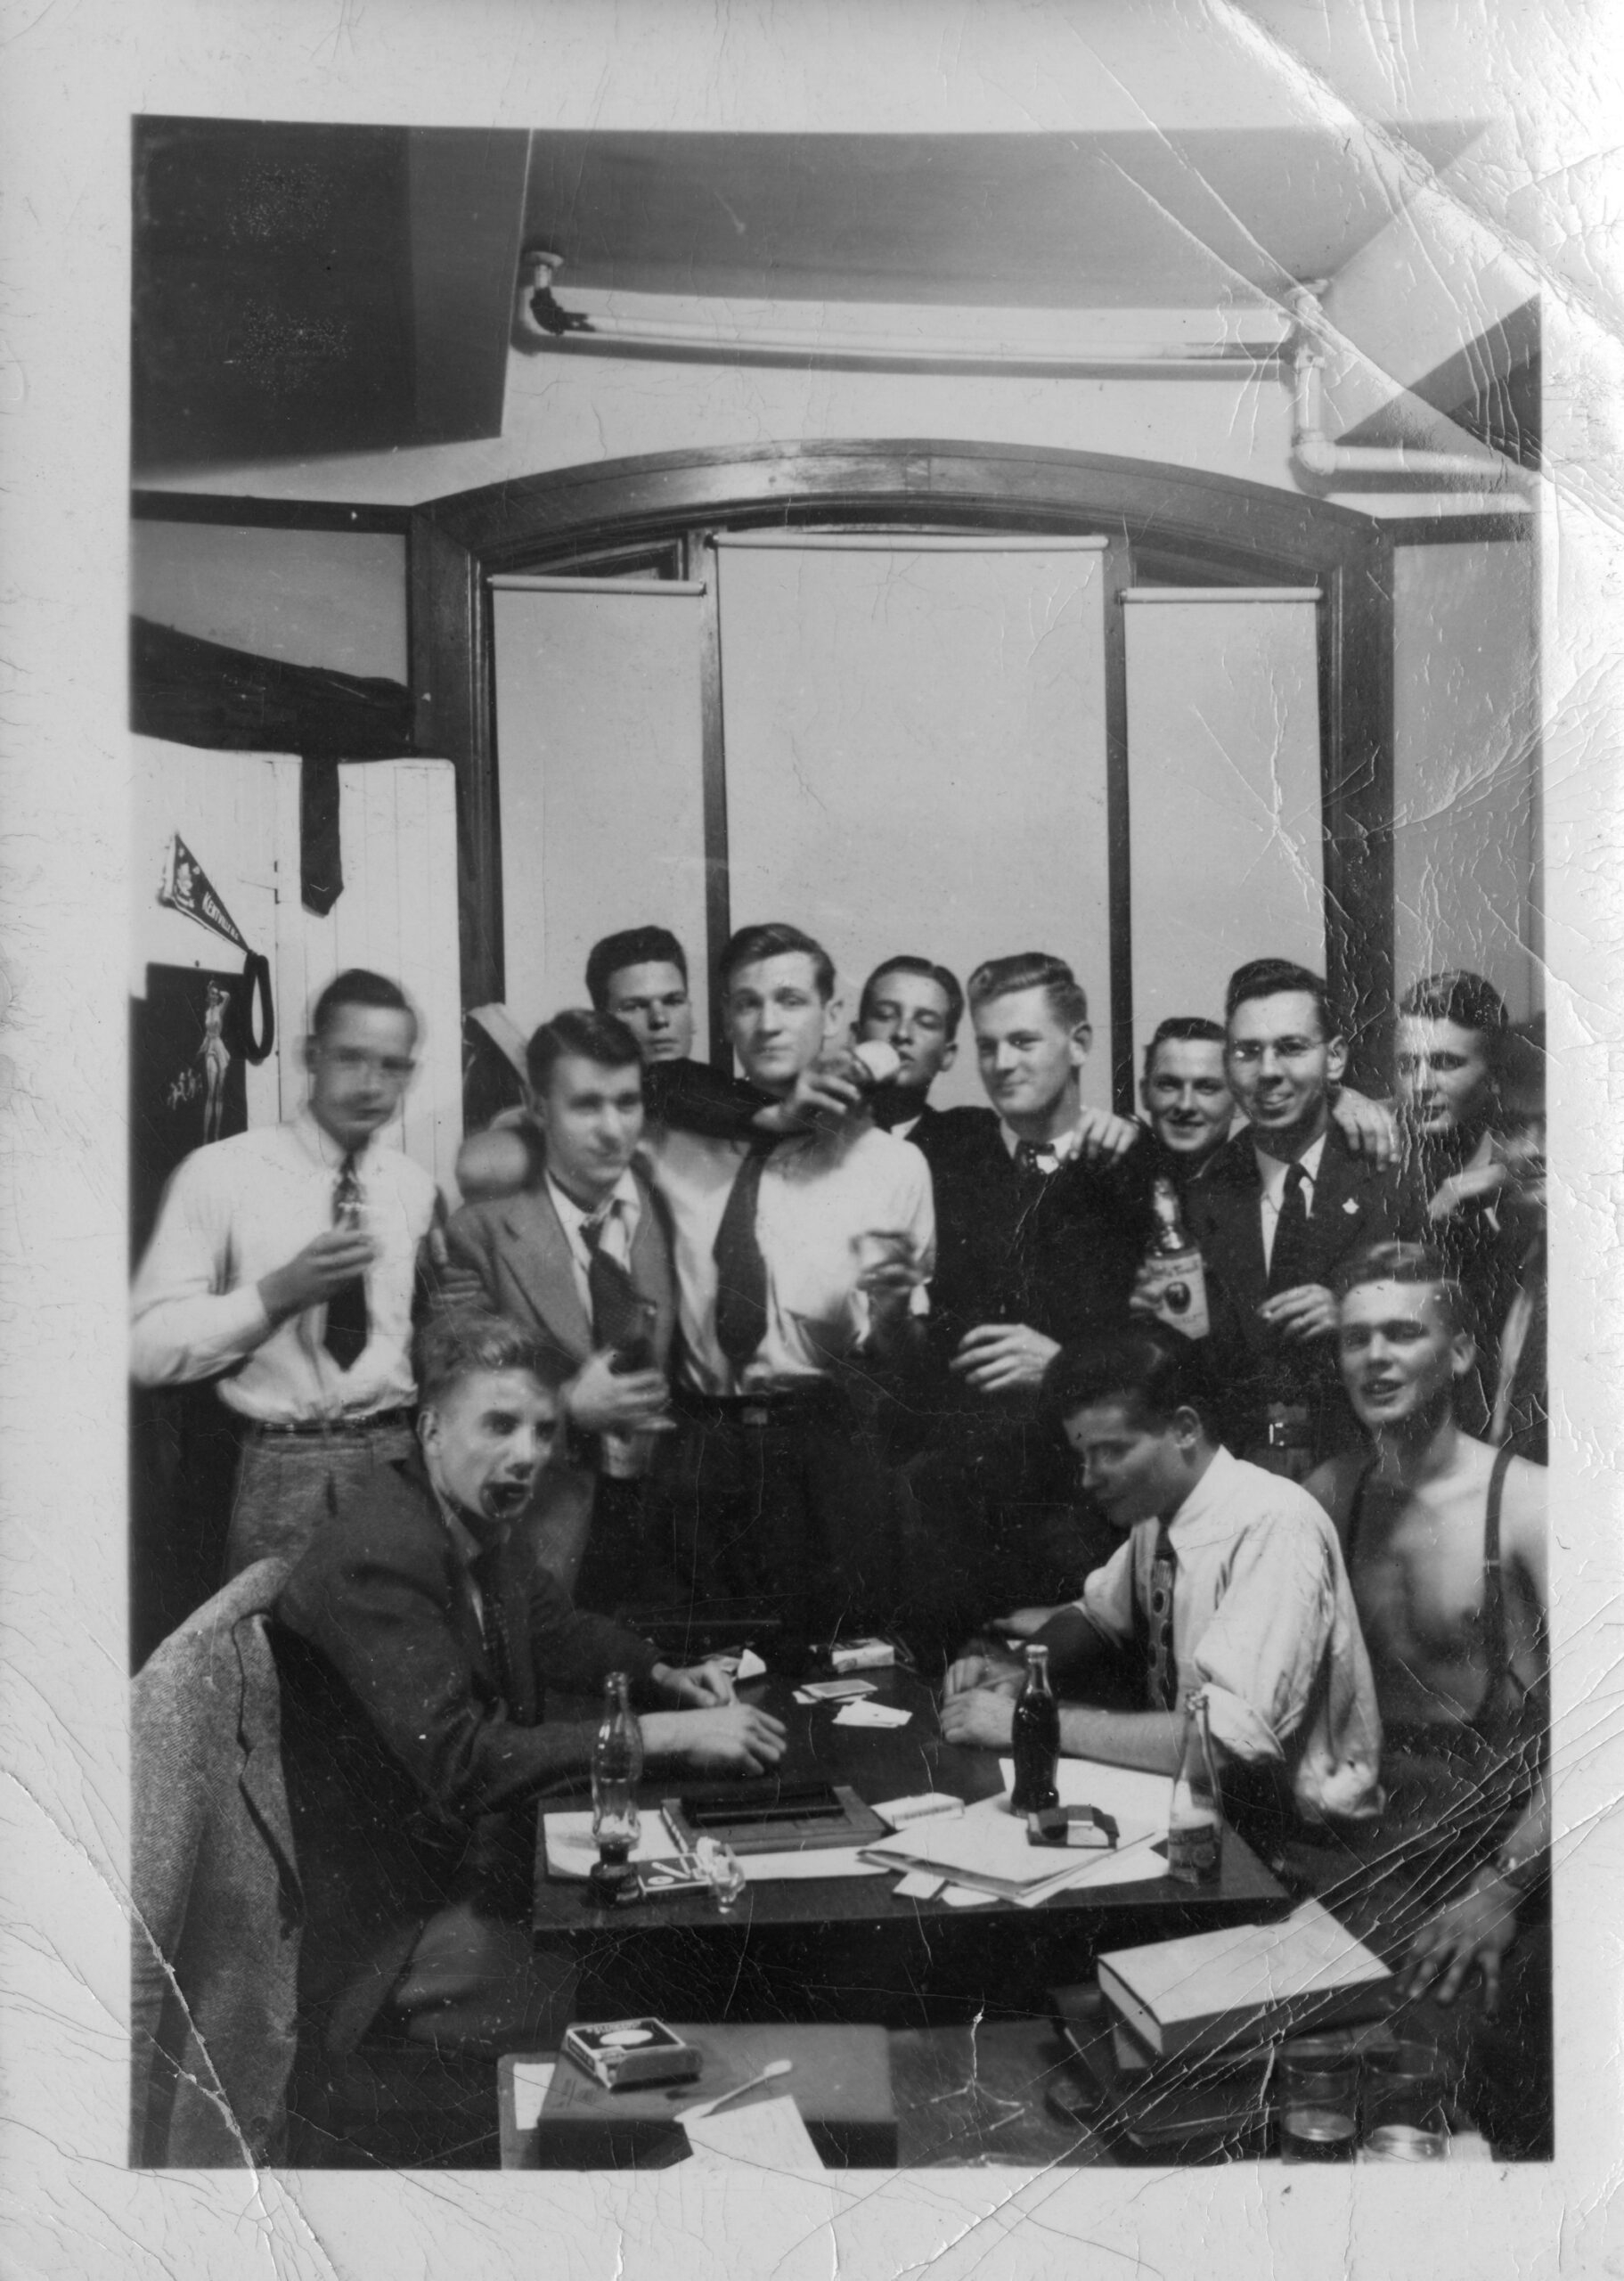 Unidentified photographer, [Men at a party], c. 1947, (gelatin silver print). Courtesy of Toronto Metropolitan University Libraries